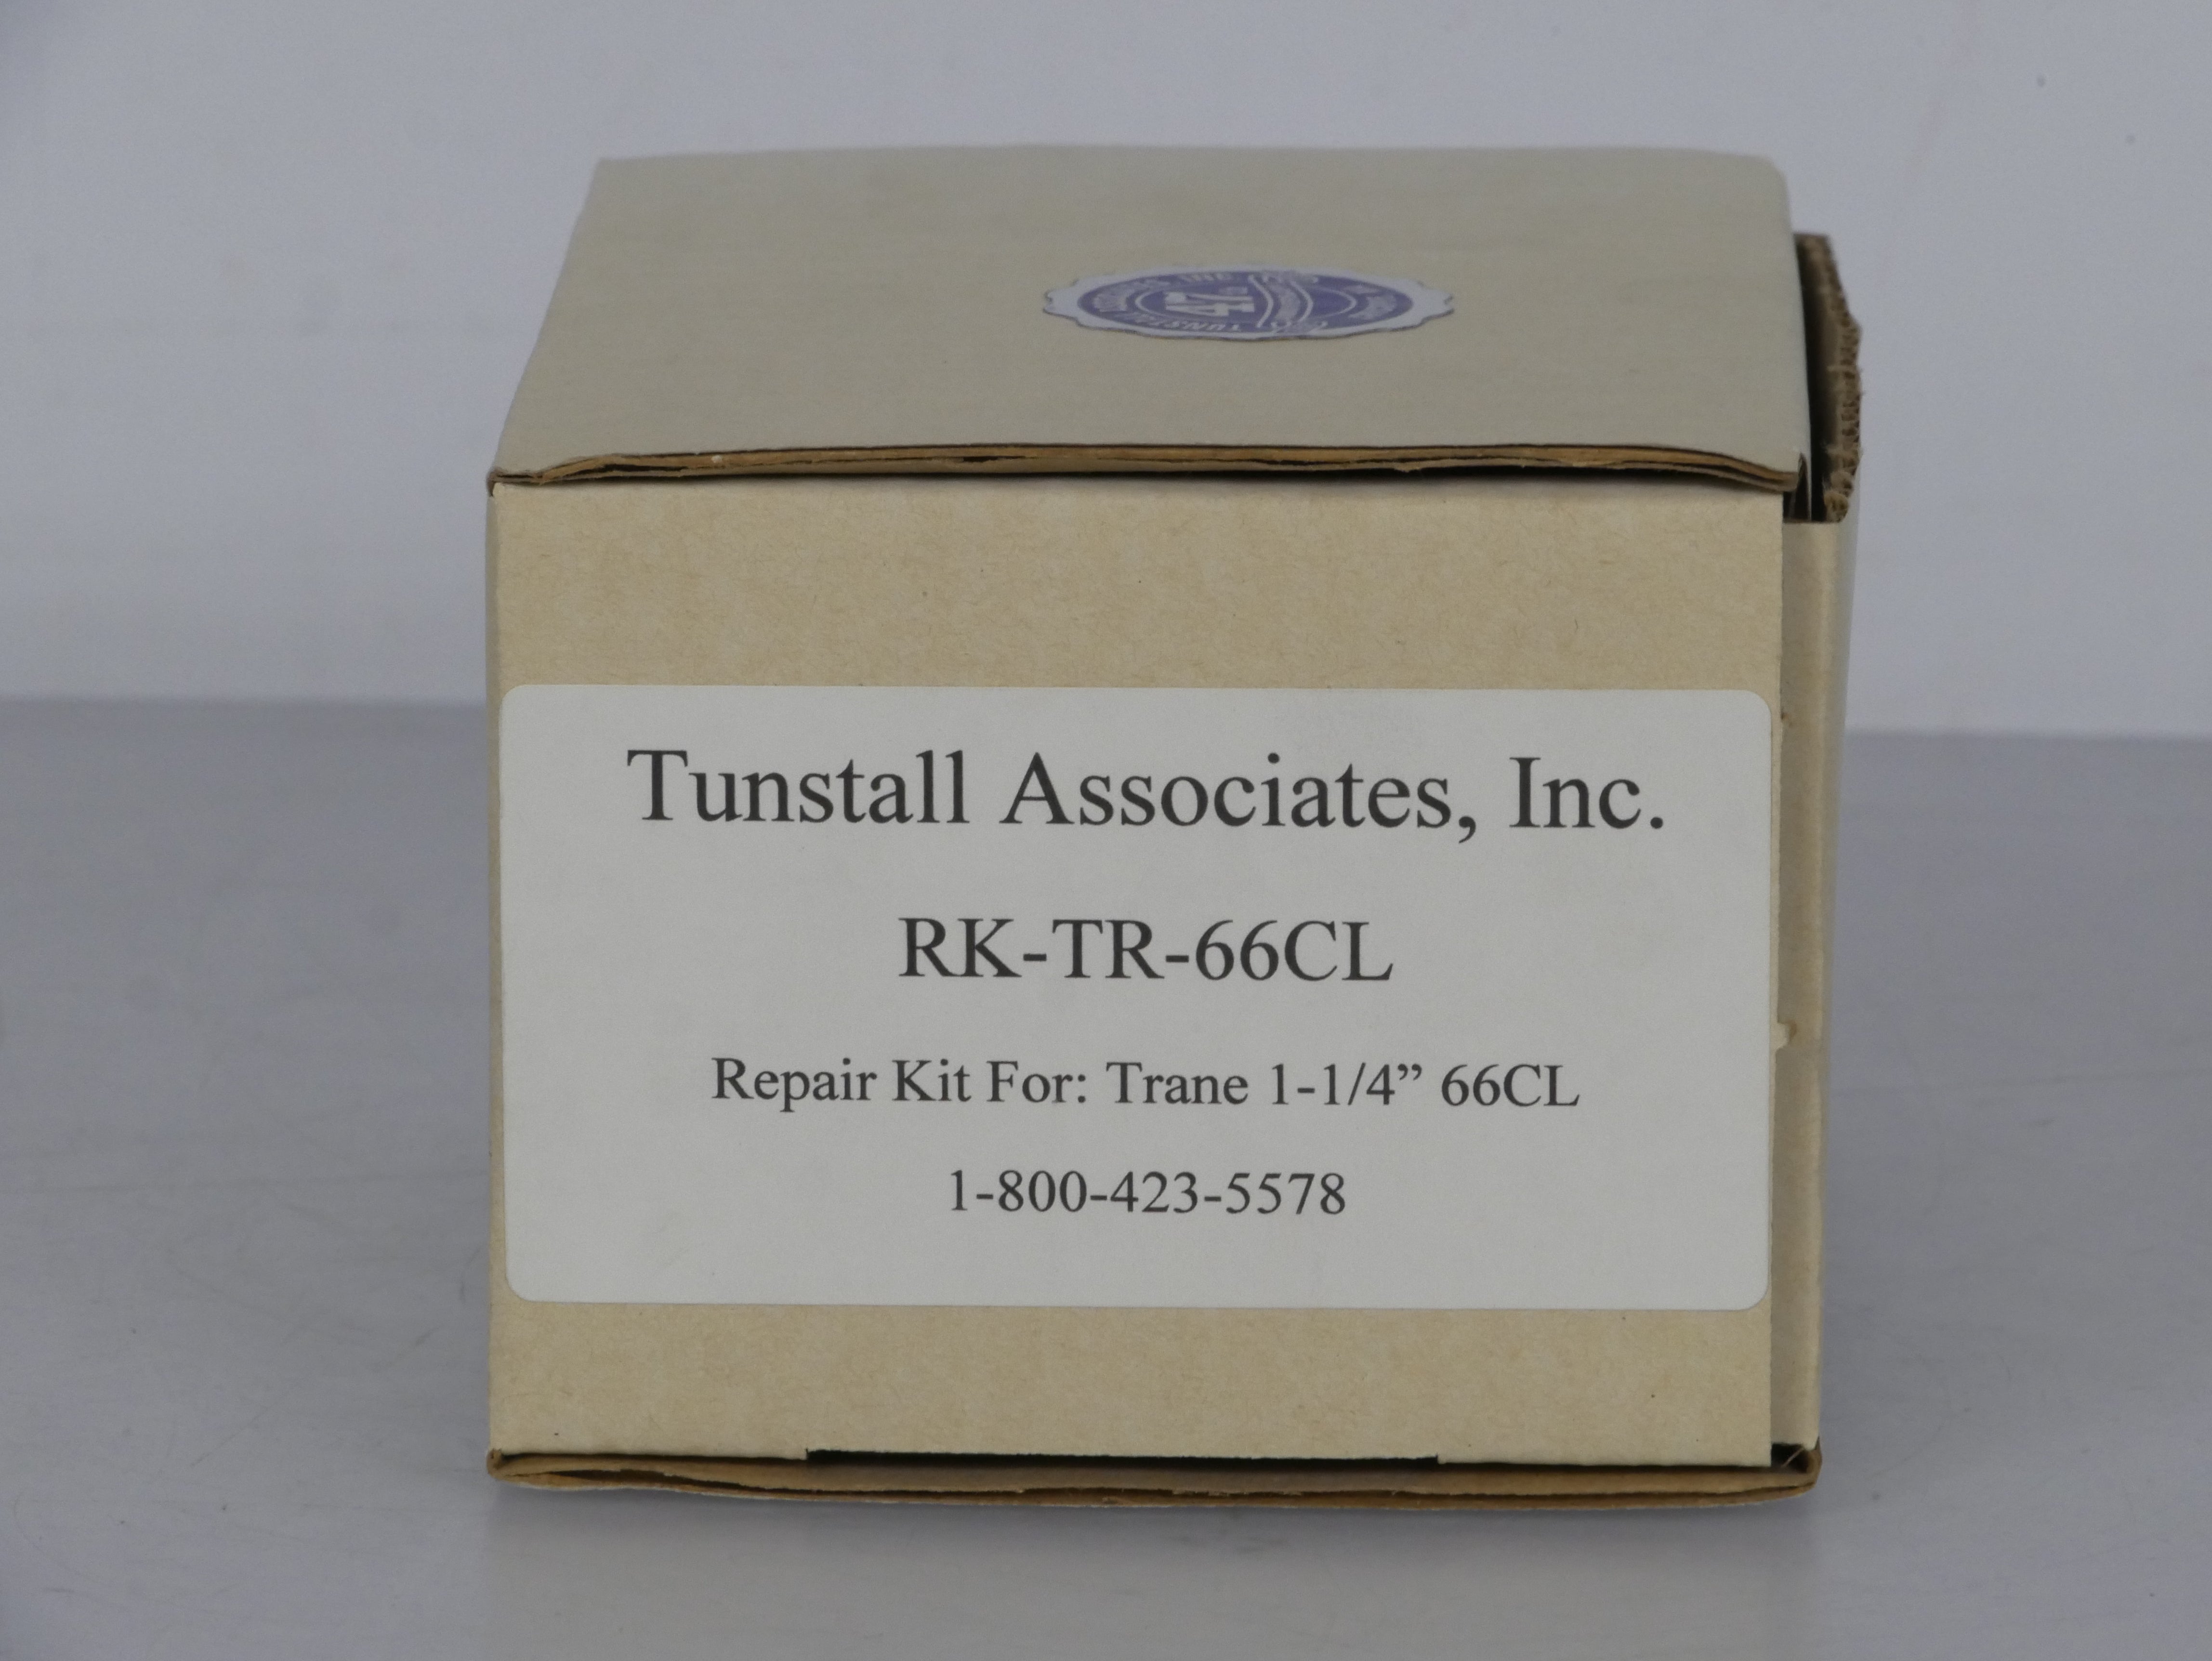 Tunstall Associates Repair Kit Trane 66CL RK-TR-66CL